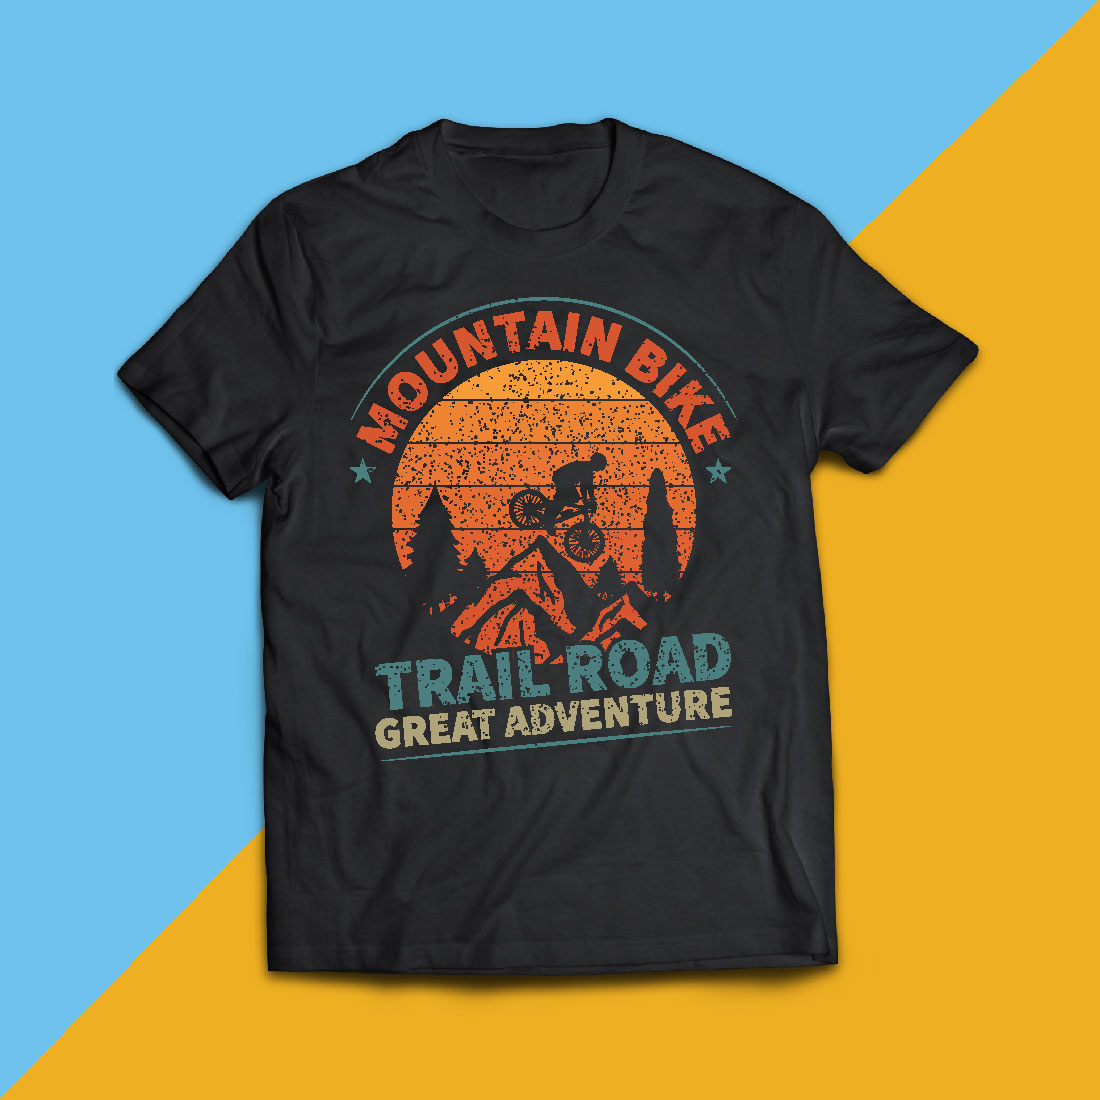 Mountain Bike T-shirt Design.